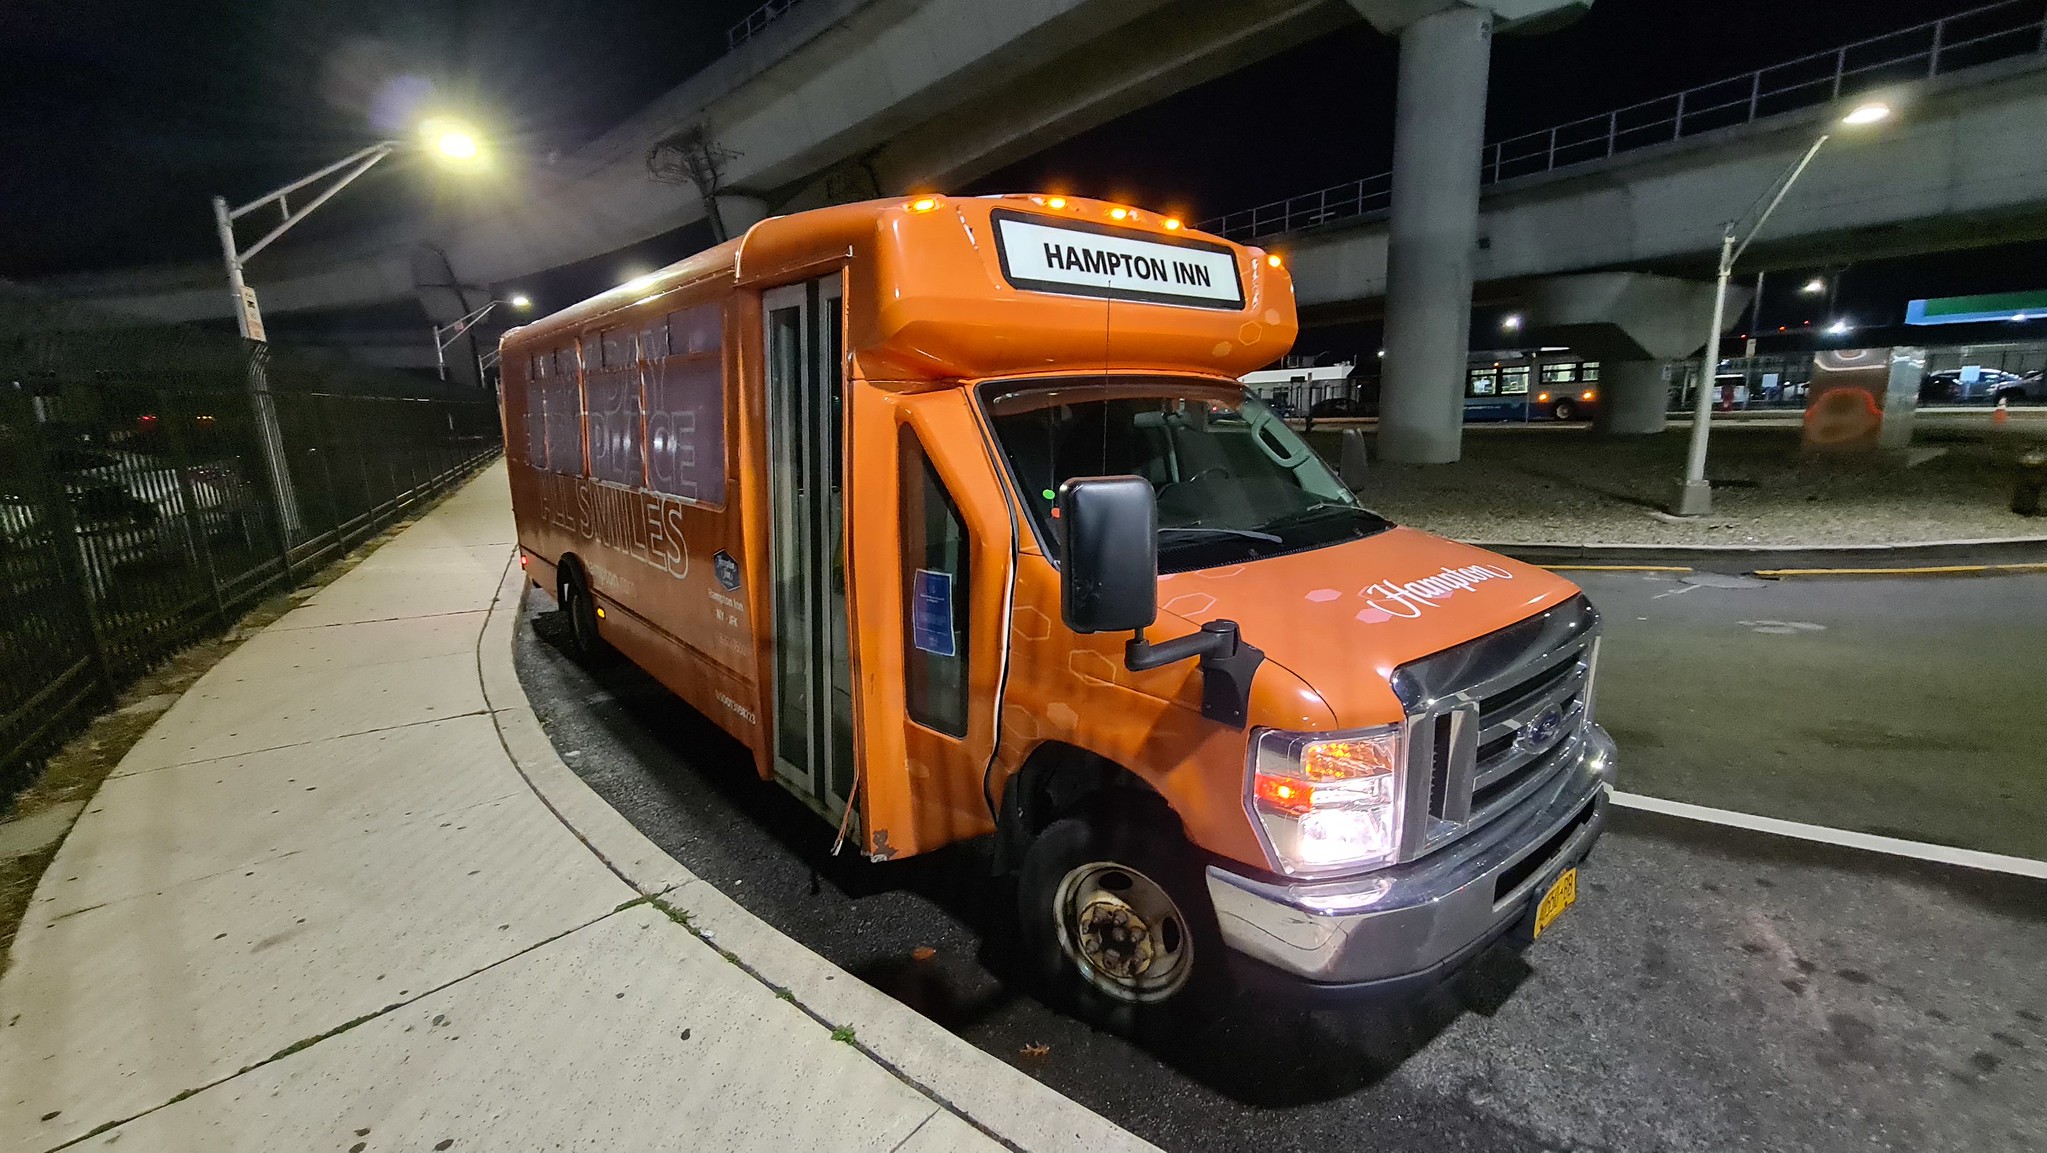 The Hilton shuttle bus at New York JFK